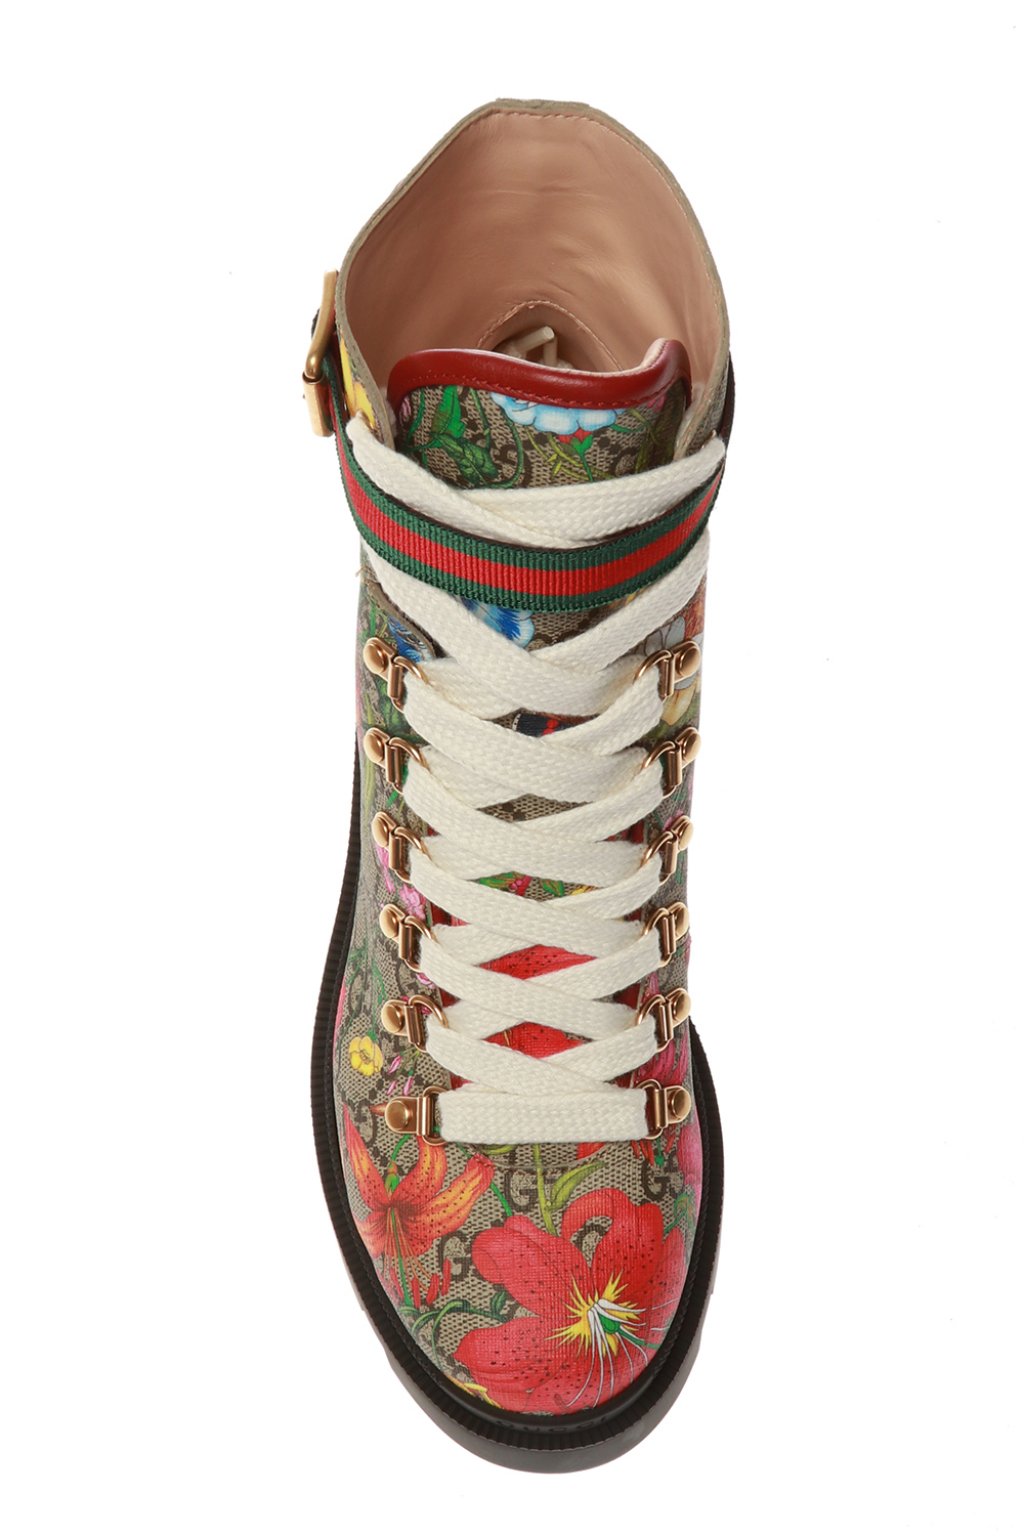 gucci flora gift set boots